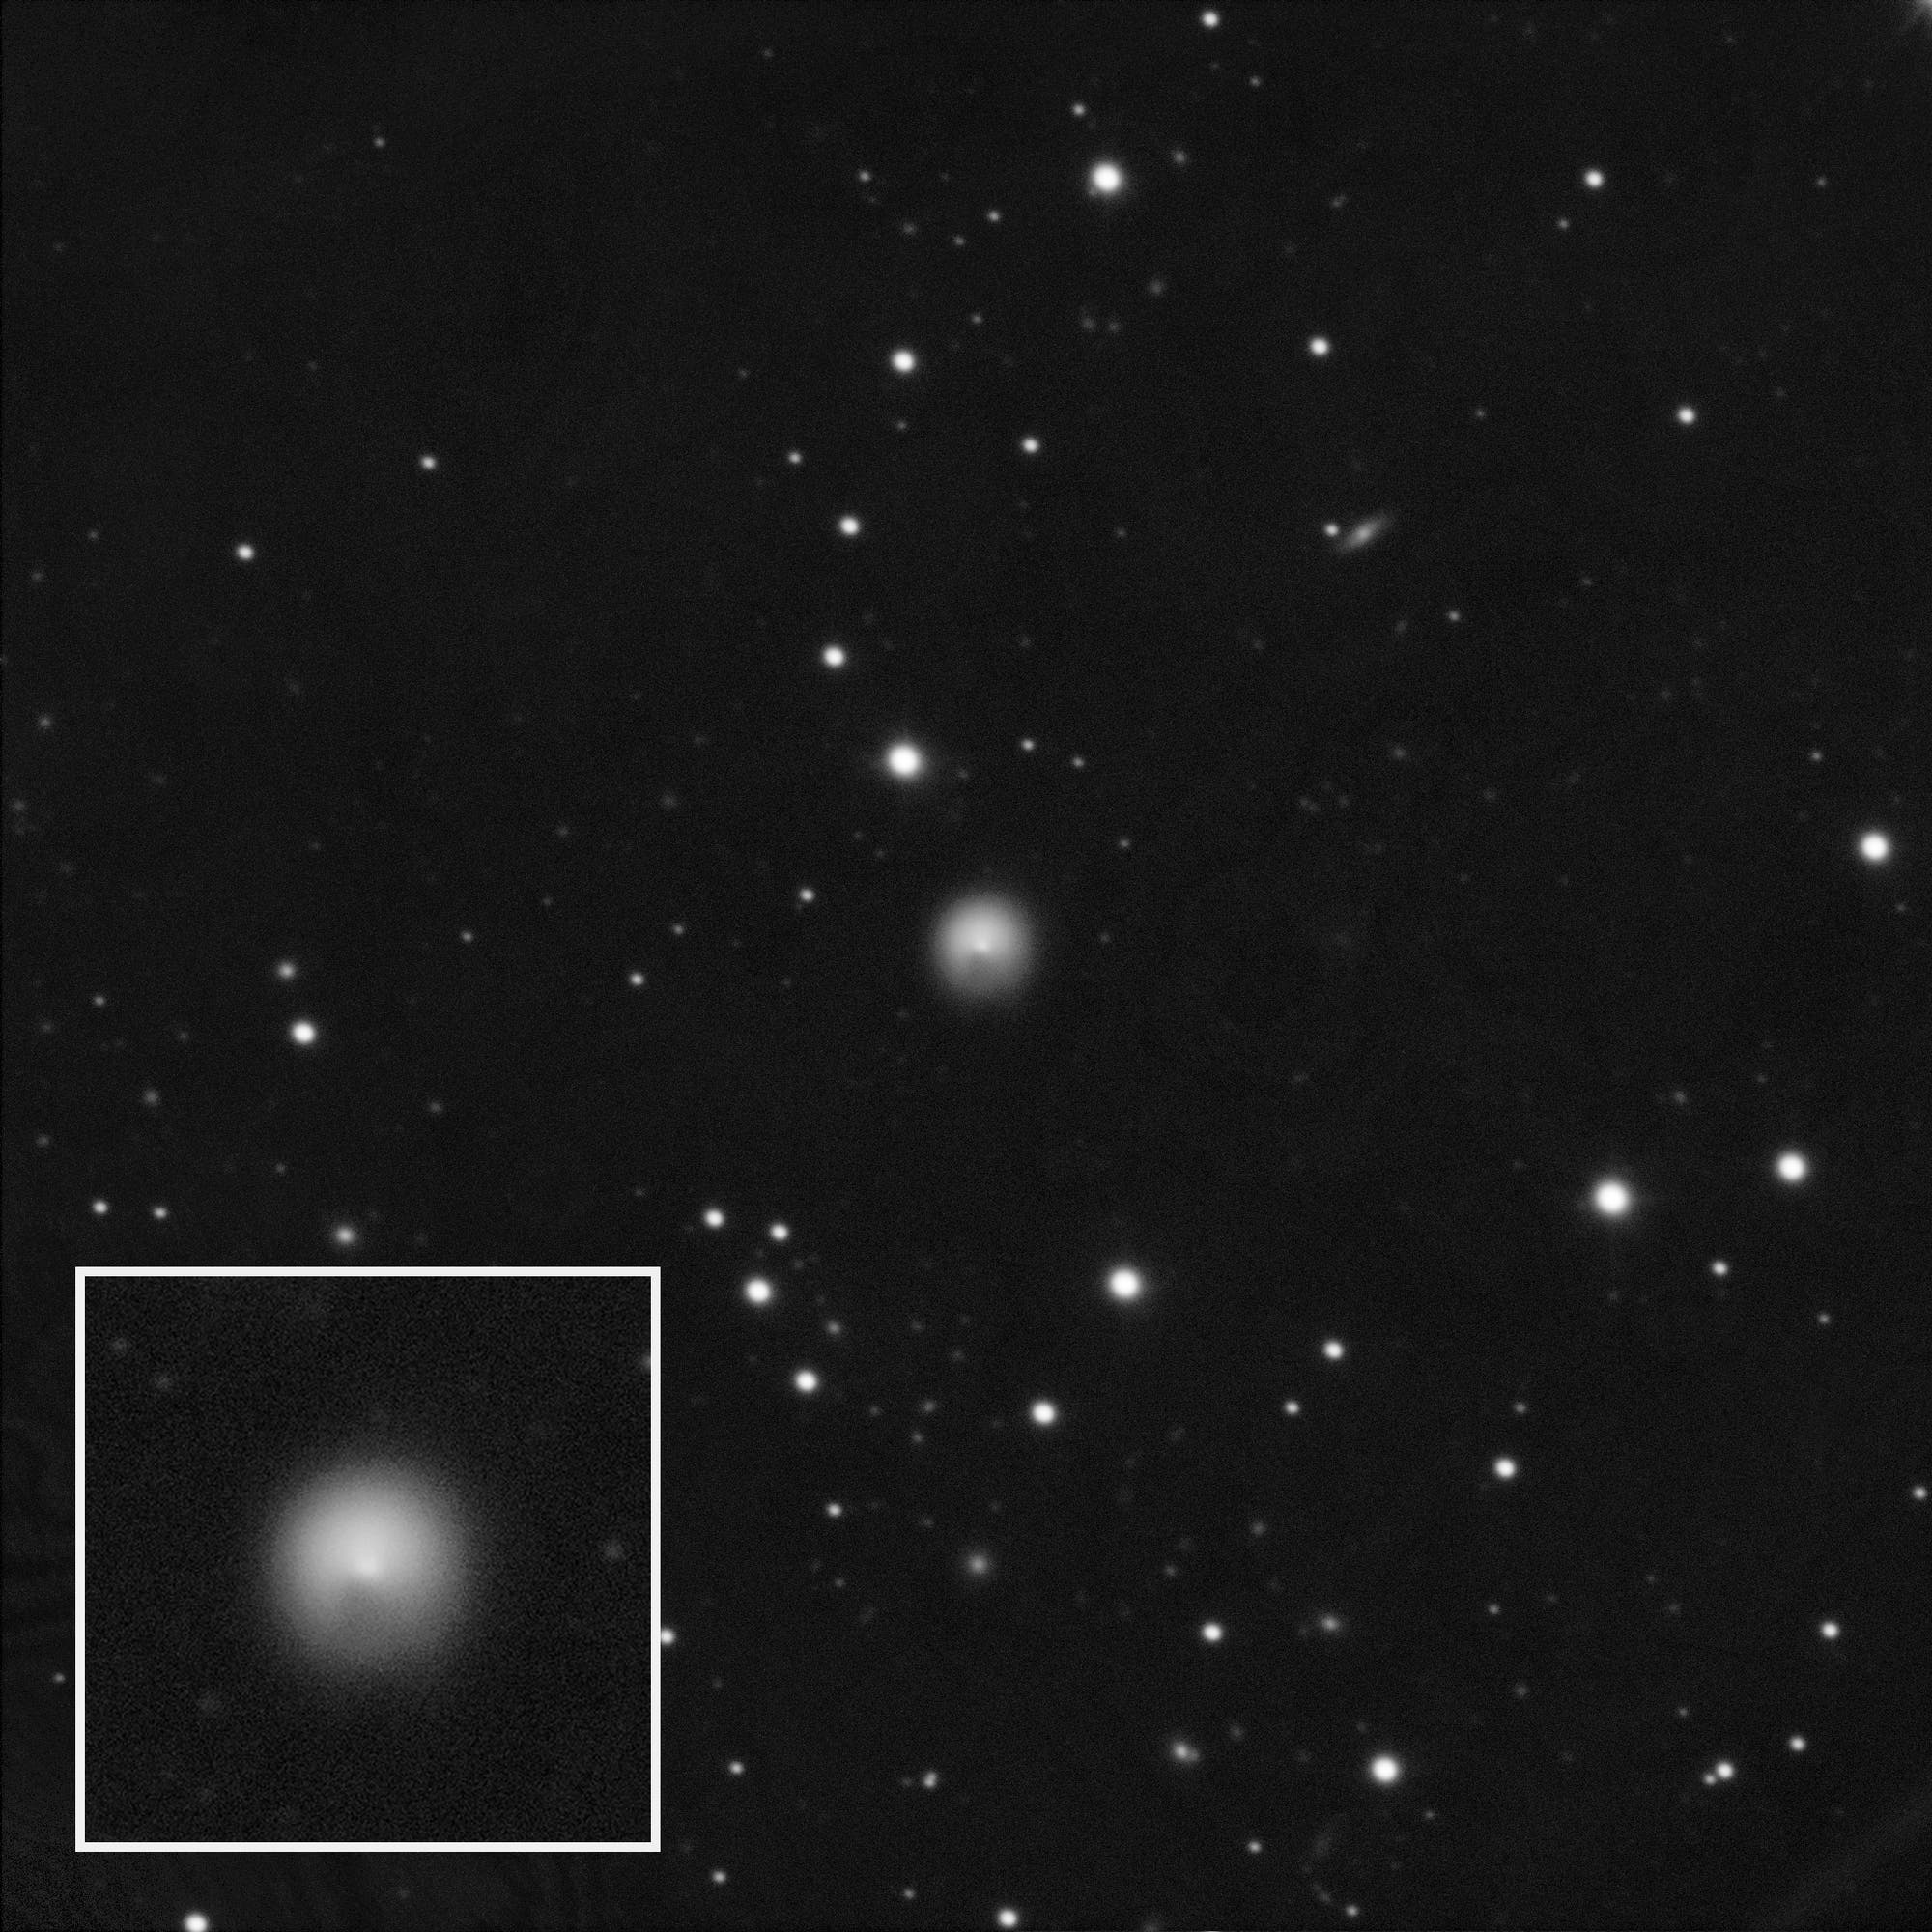 Comet 174P/Echeclus in outburst